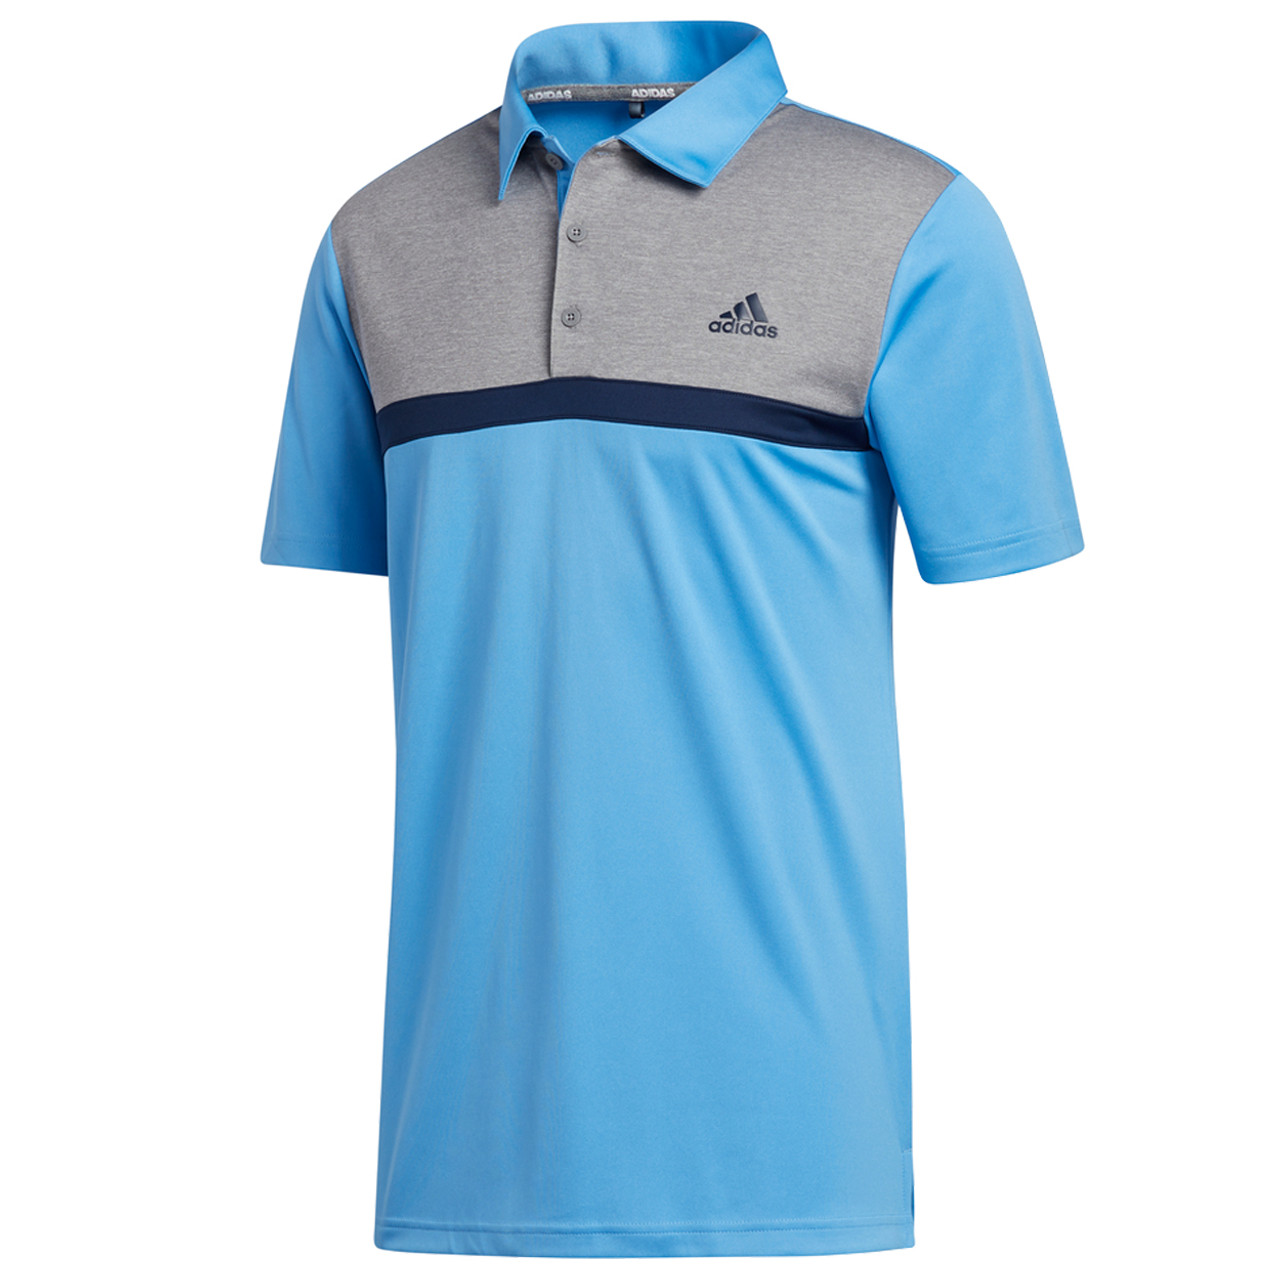 Adidas Golf Colorblocked Novelty Polo Shirt - GolfEtail.com